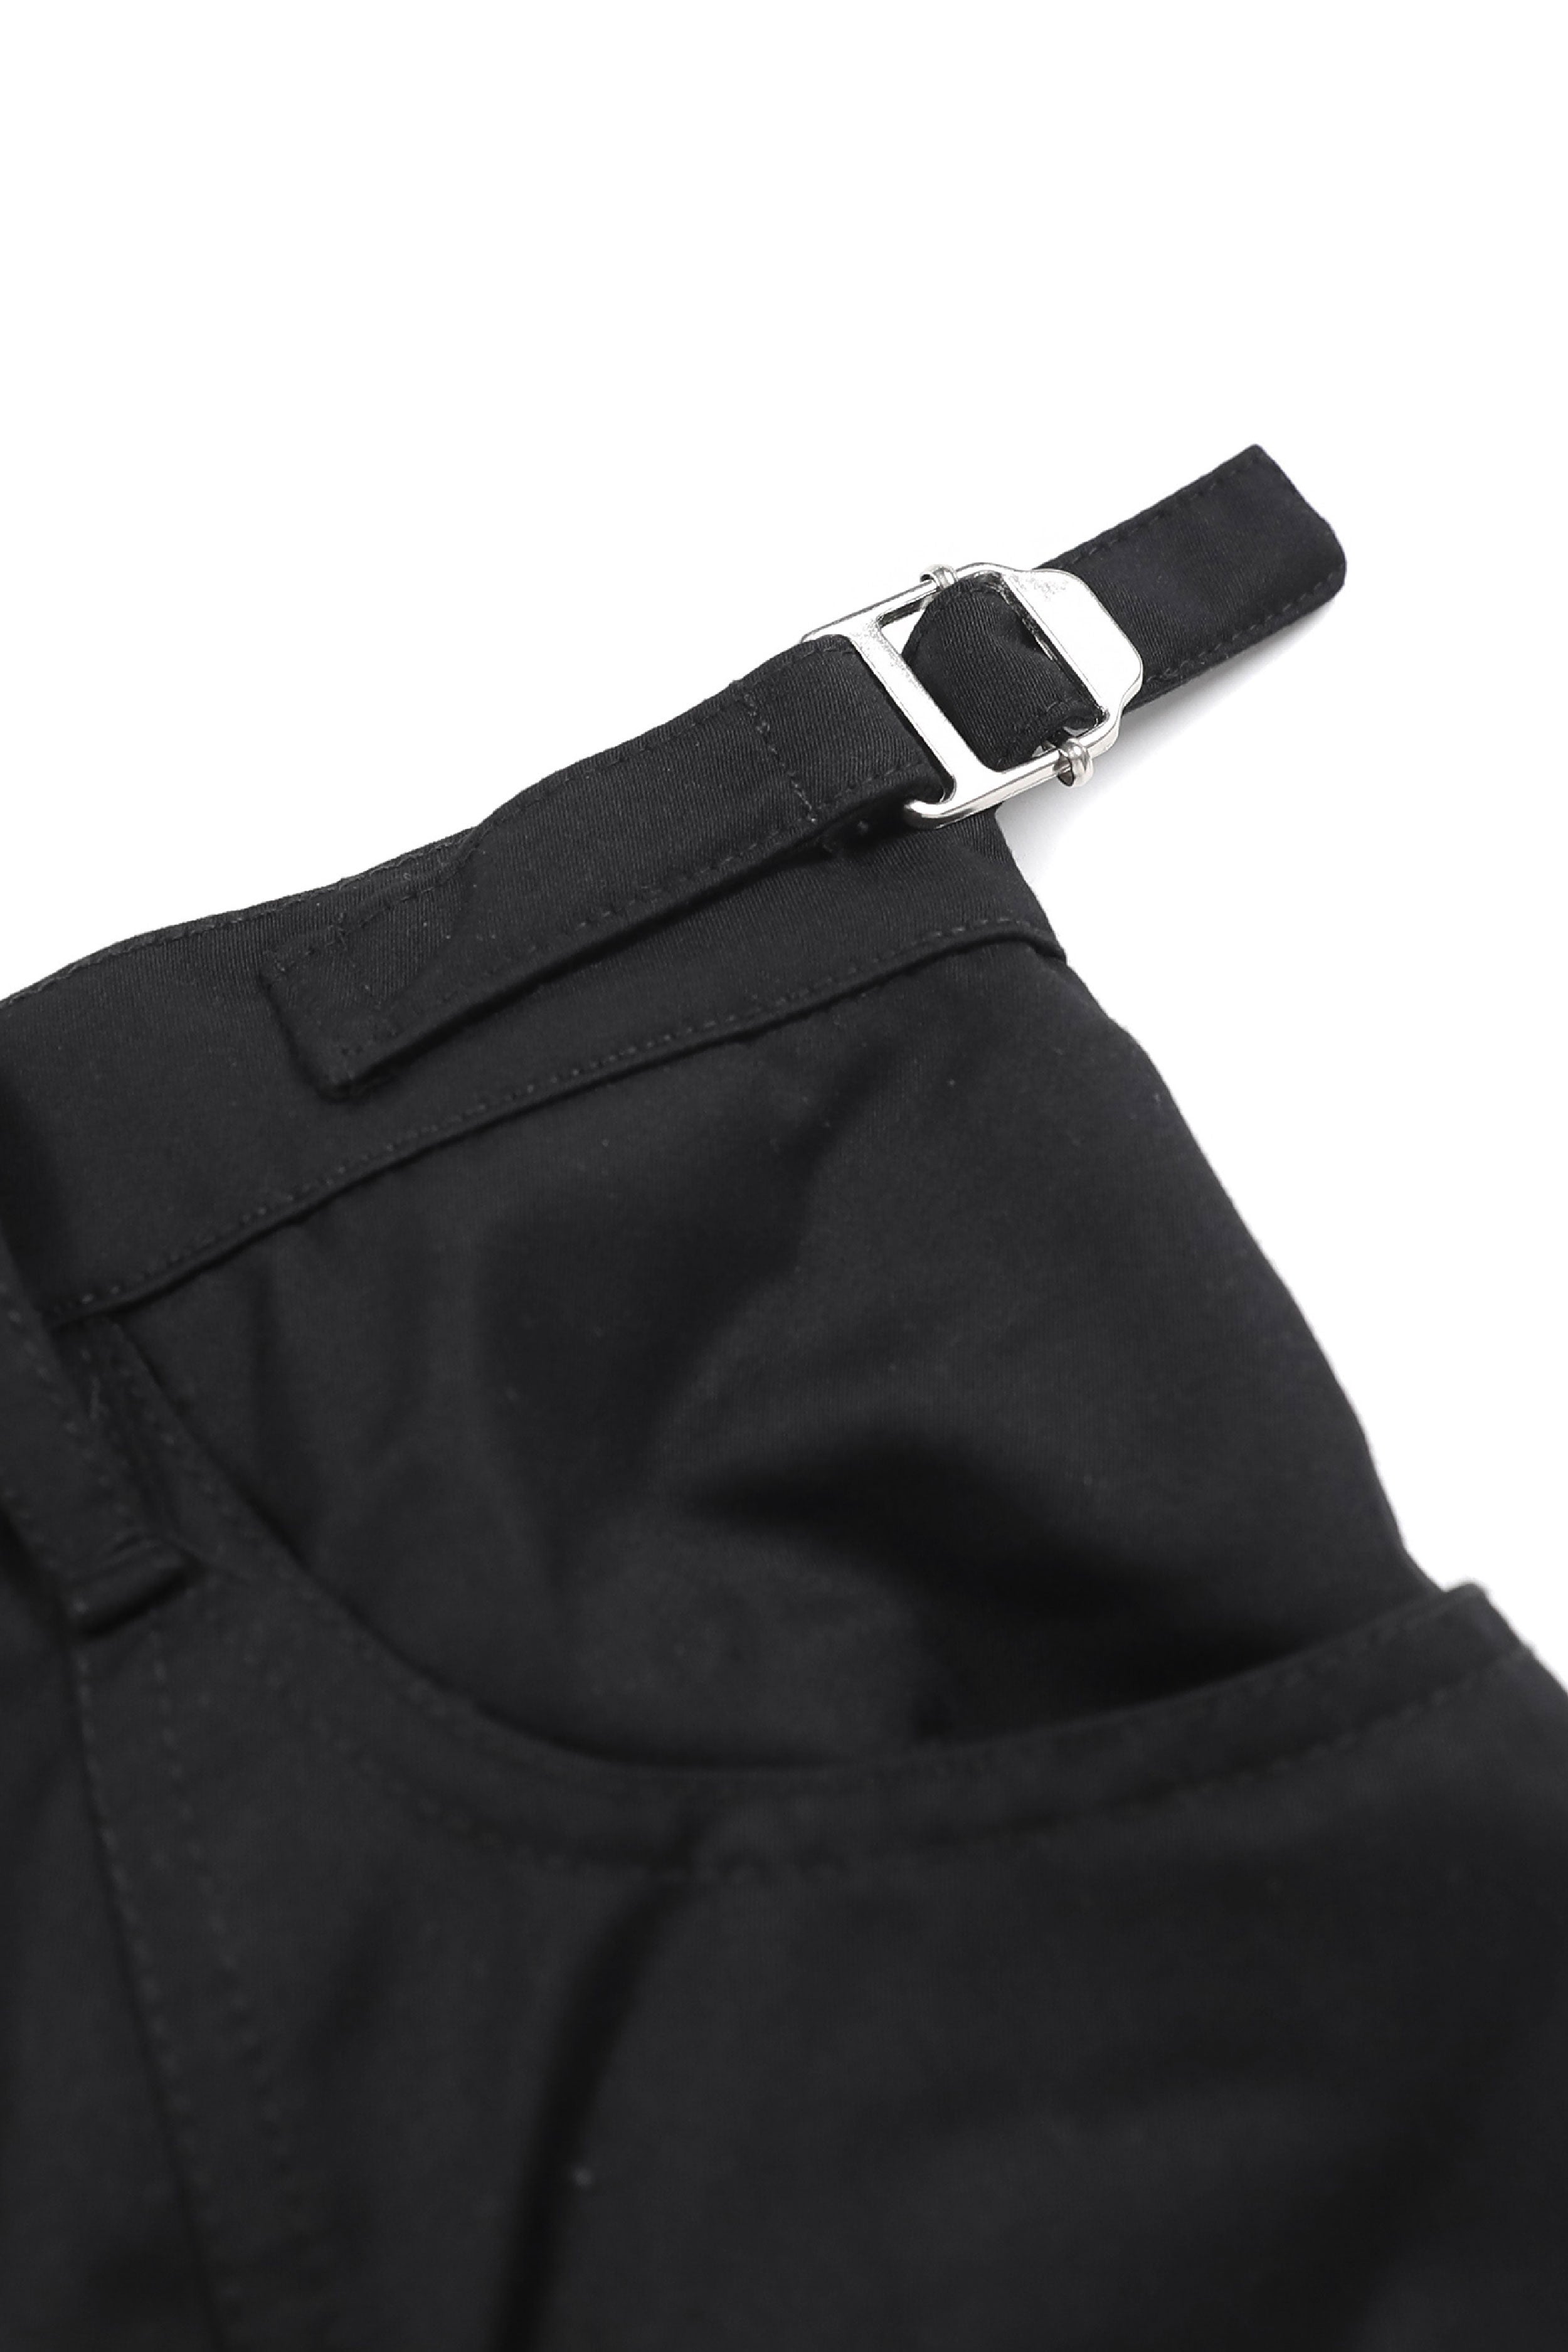 Badblood Twill Suit Cargo Long Skirt Black